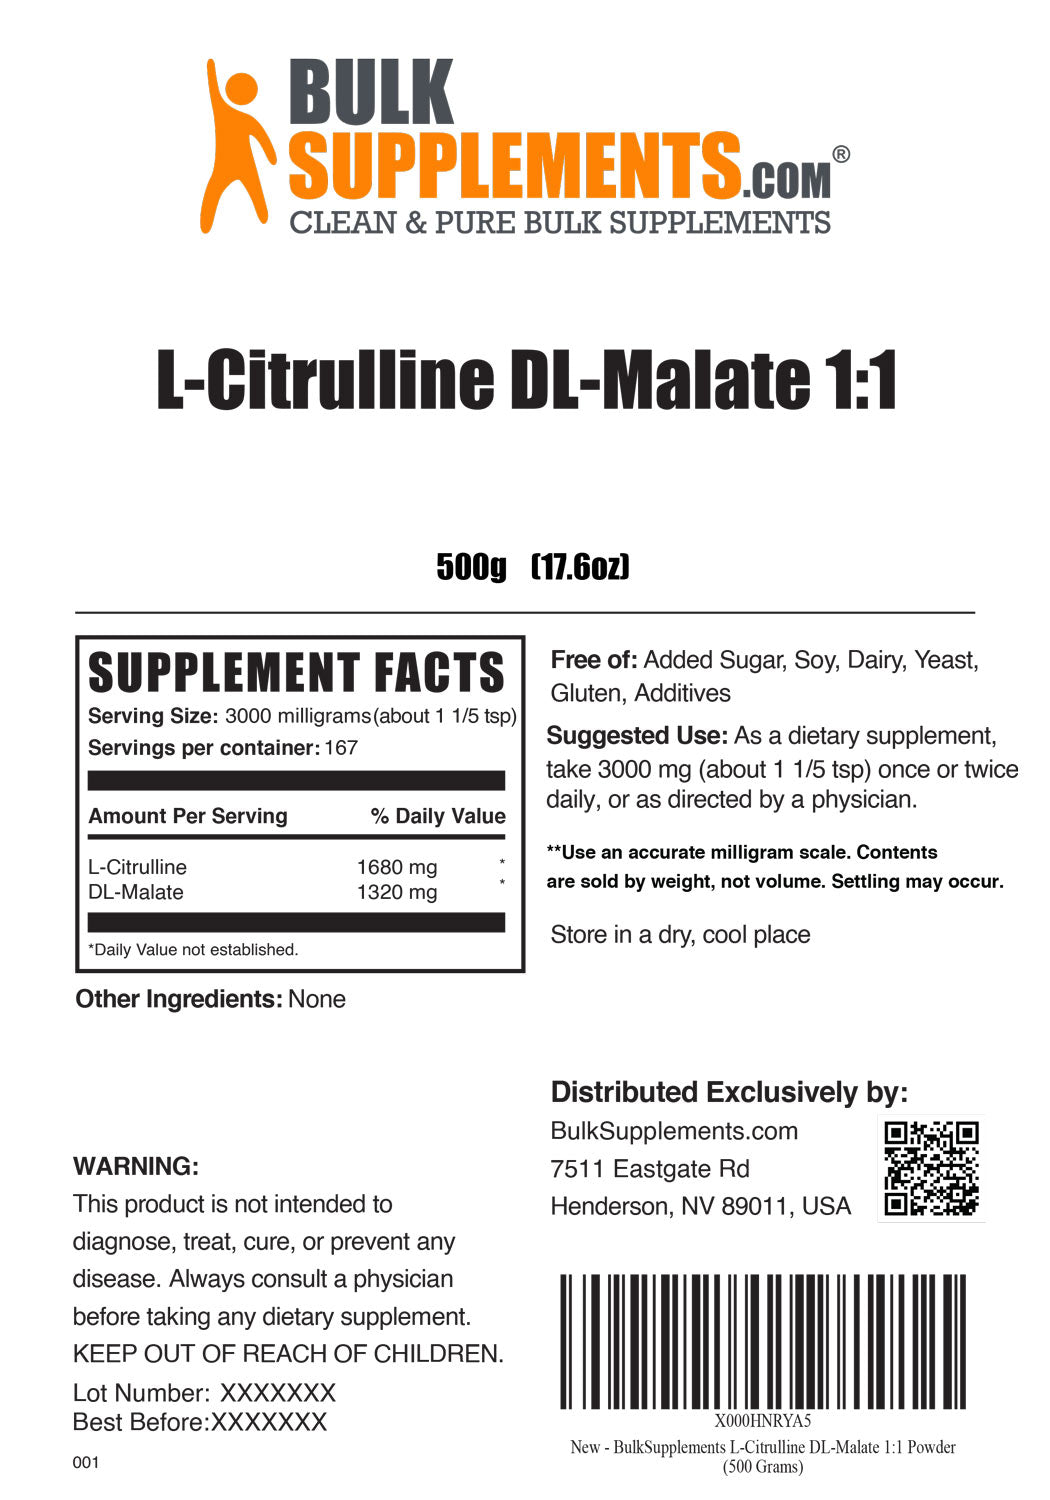 L-Citrulline DL-Malate 1:1 Supplement Facts for 500g bag